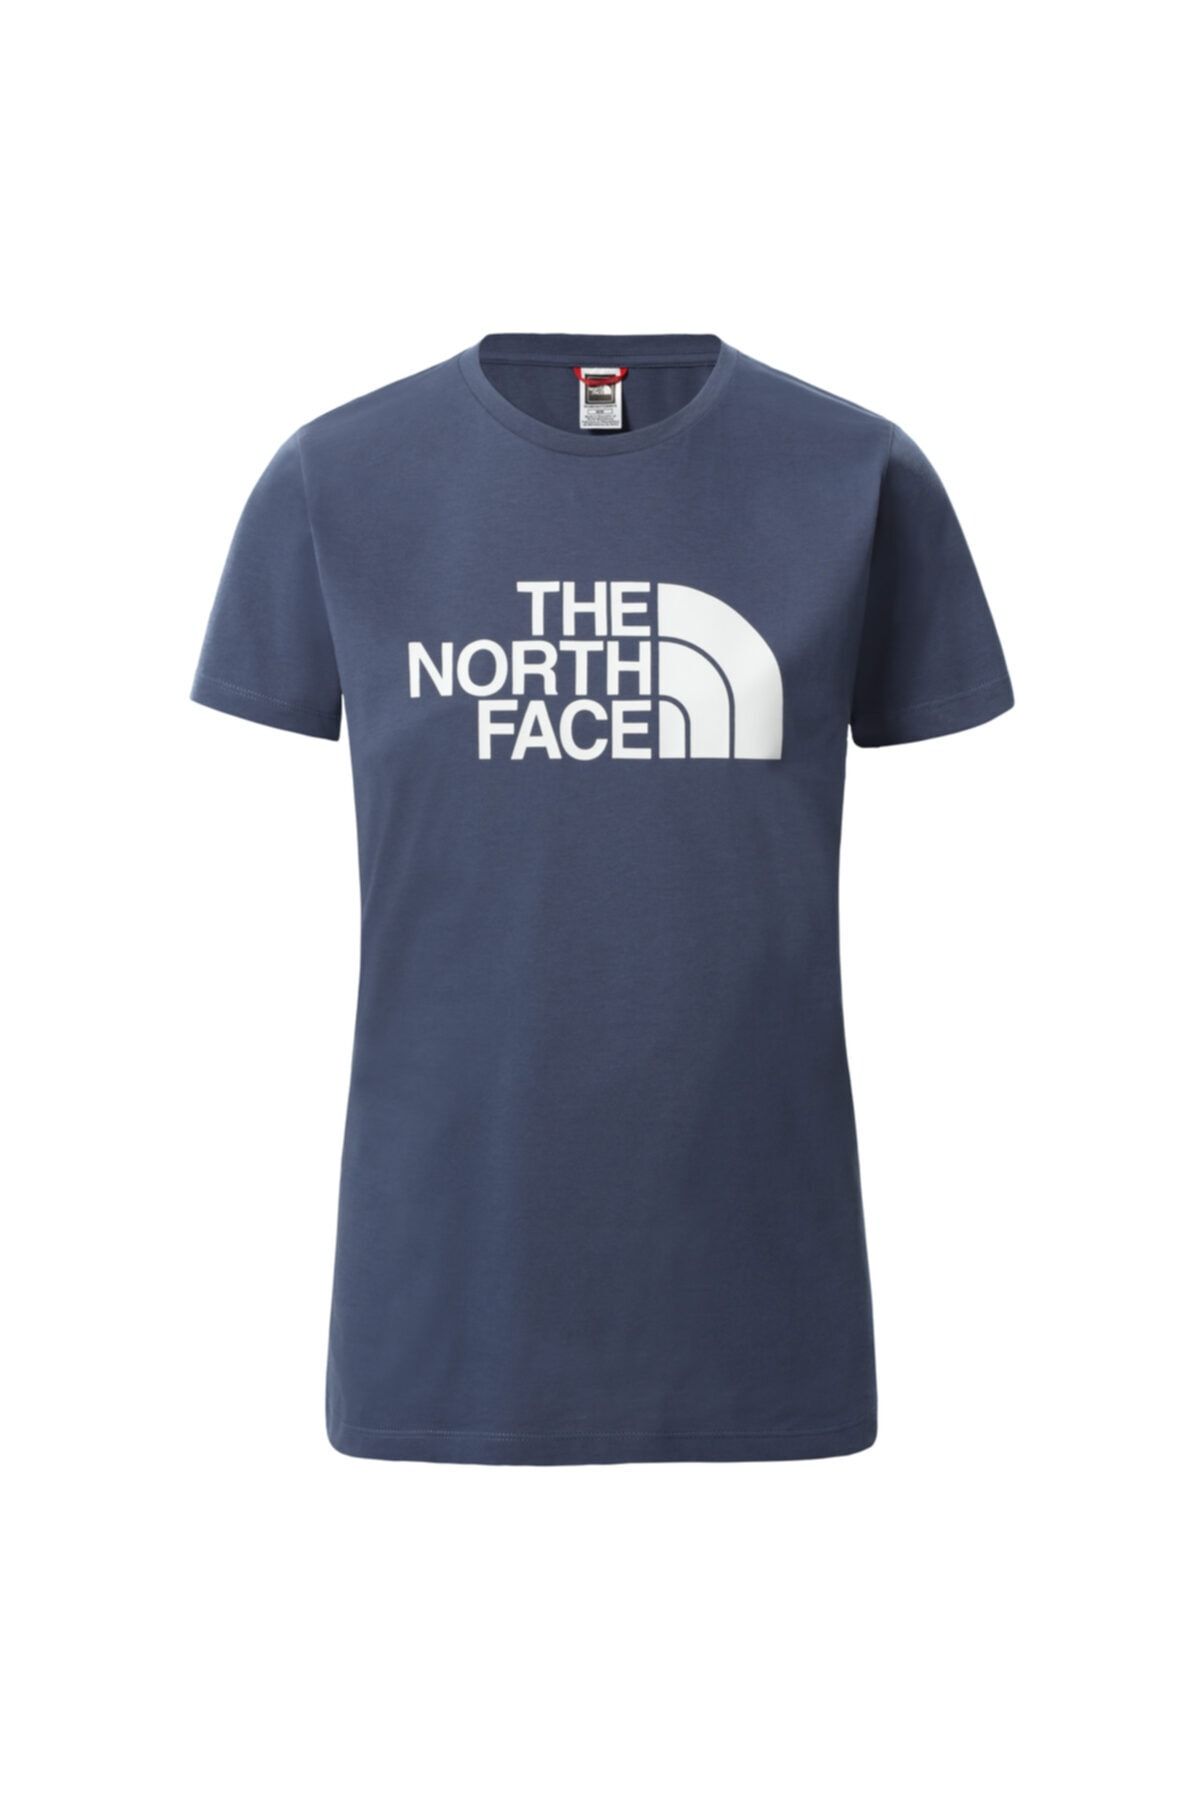 The North Face W S/s Easy Tee Kadın Lacivert Tshirt Nf0a4t1qwc41